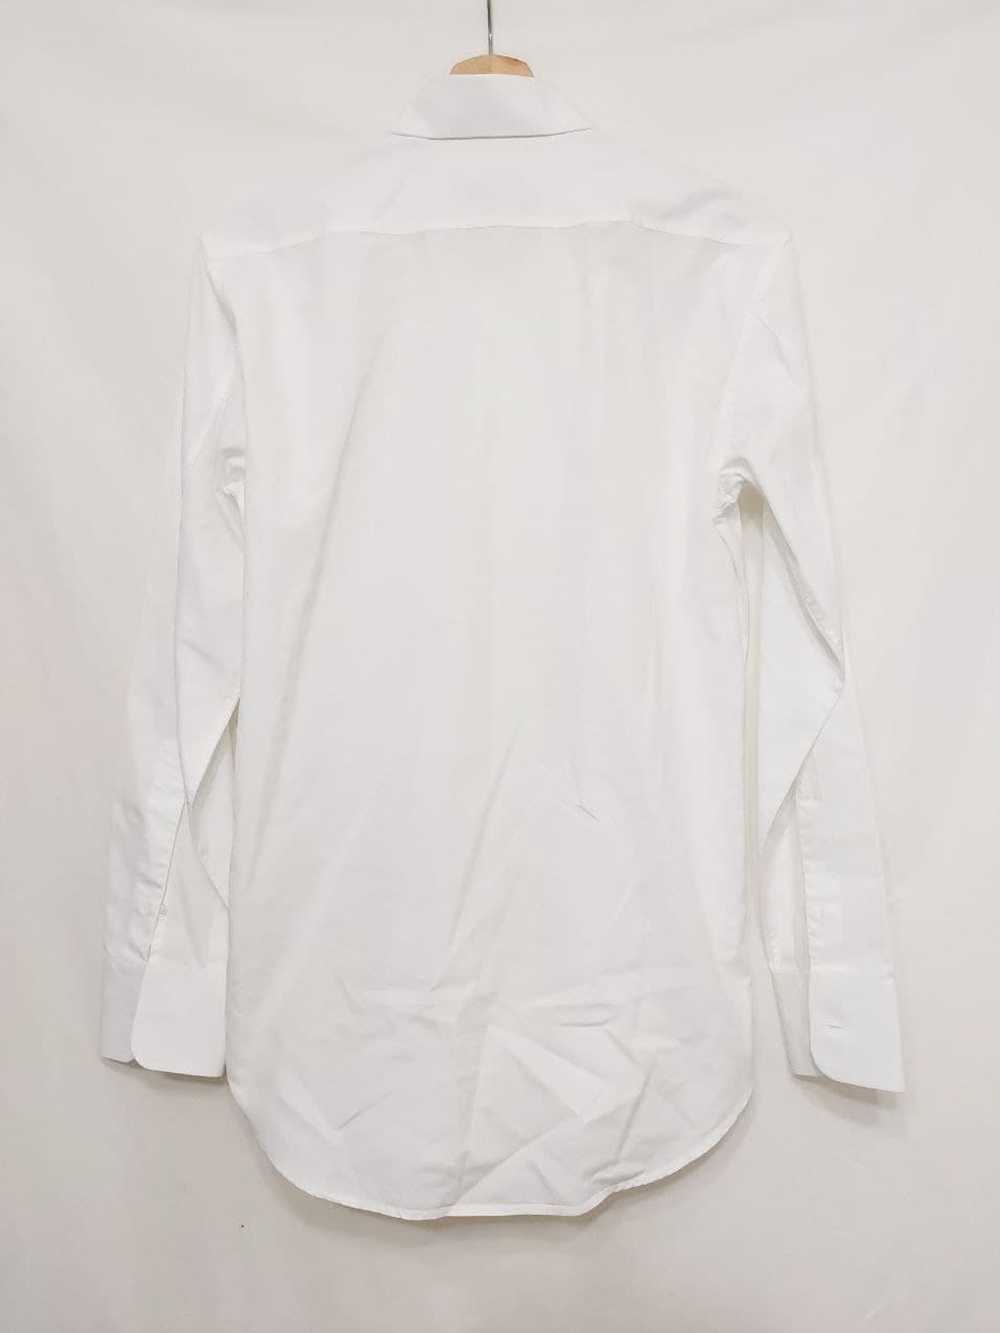 Yves Saint Laurent Shirt - image 2